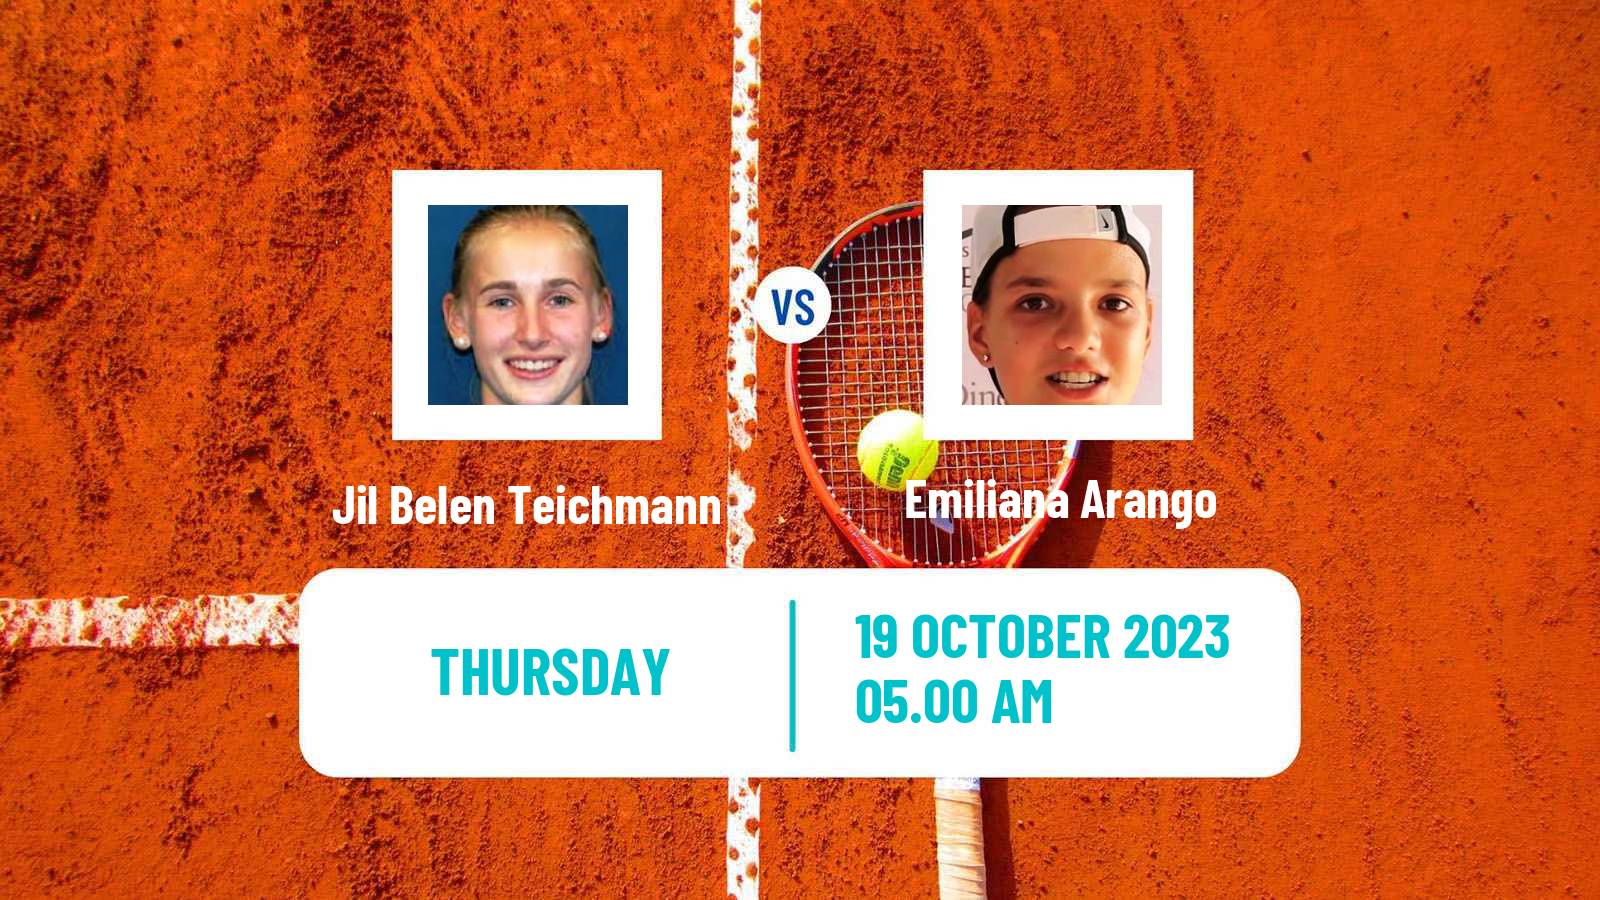 Tennis WTA Cluj Napoca Jil Belen Teichmann - Emiliana Arango